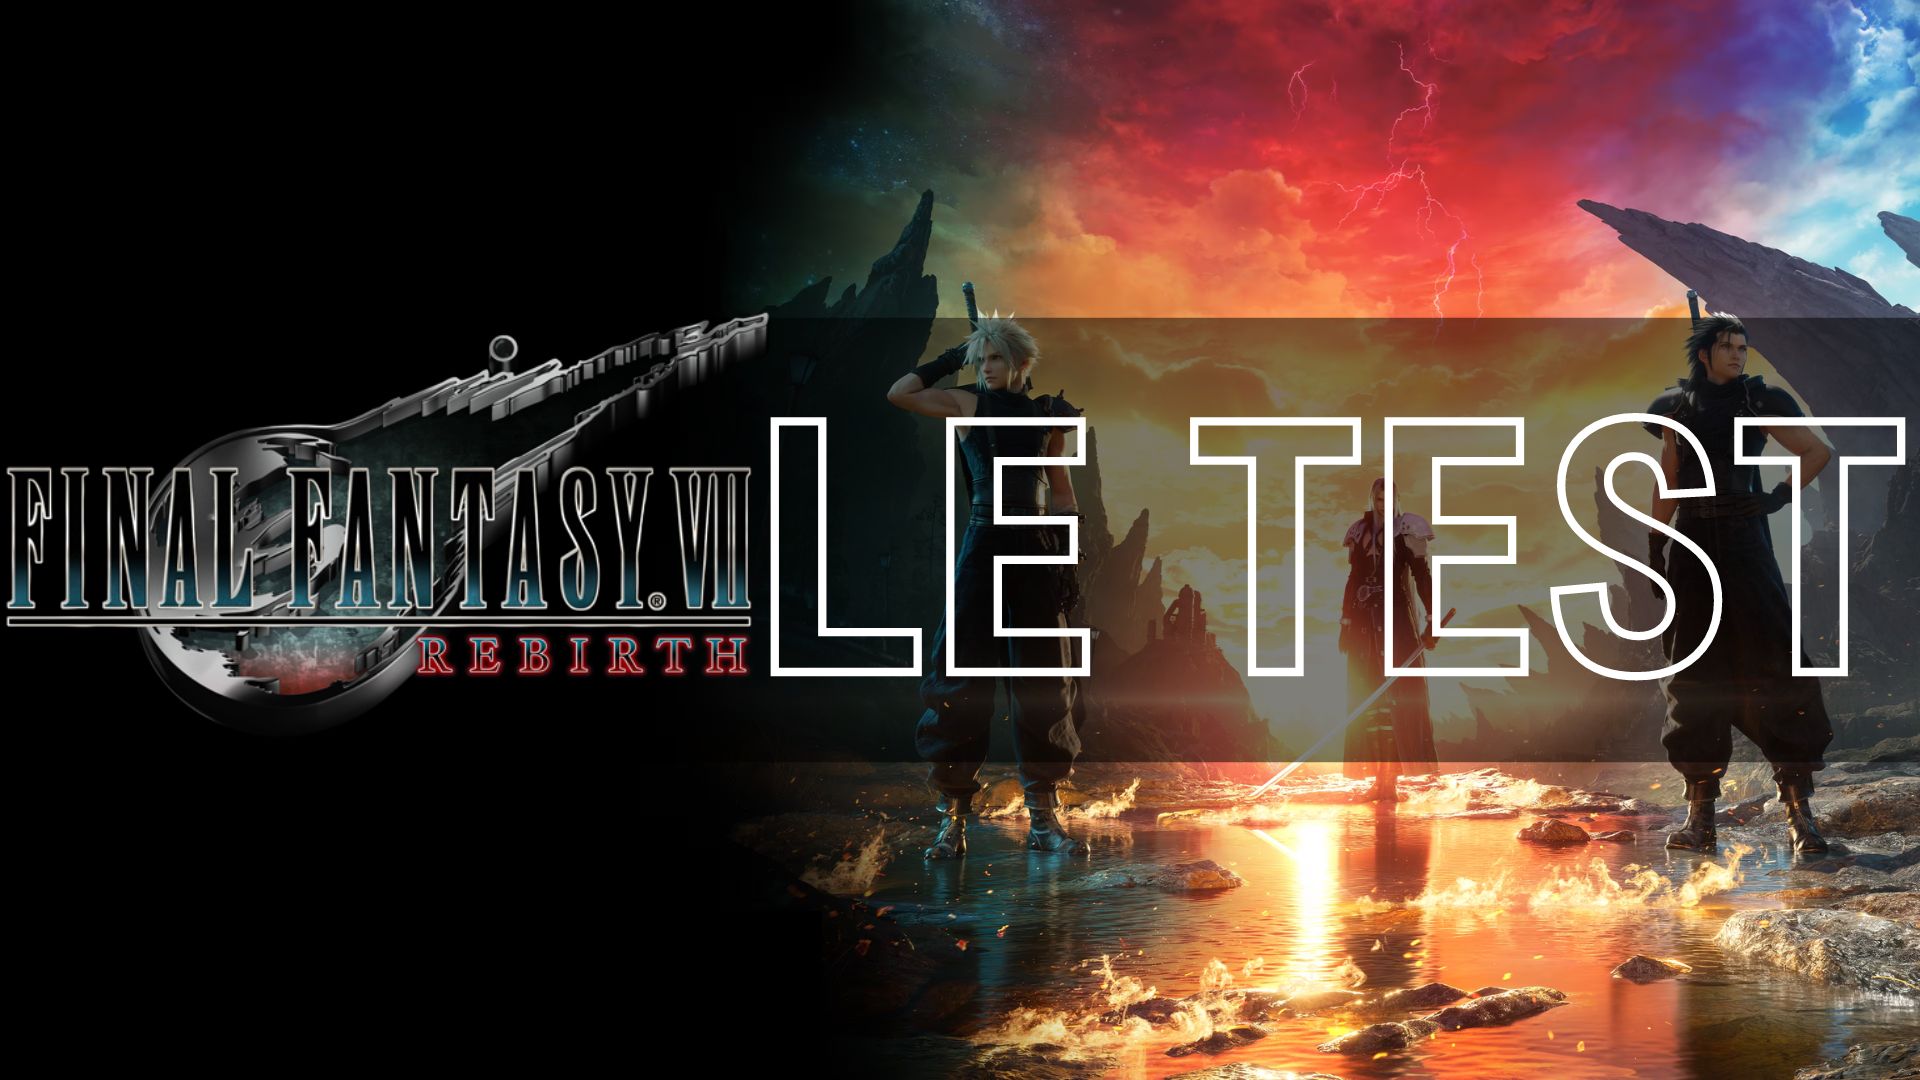 Test de Final Fantasy VII Rebirth | Une aventure grandiose à vivre absolument !